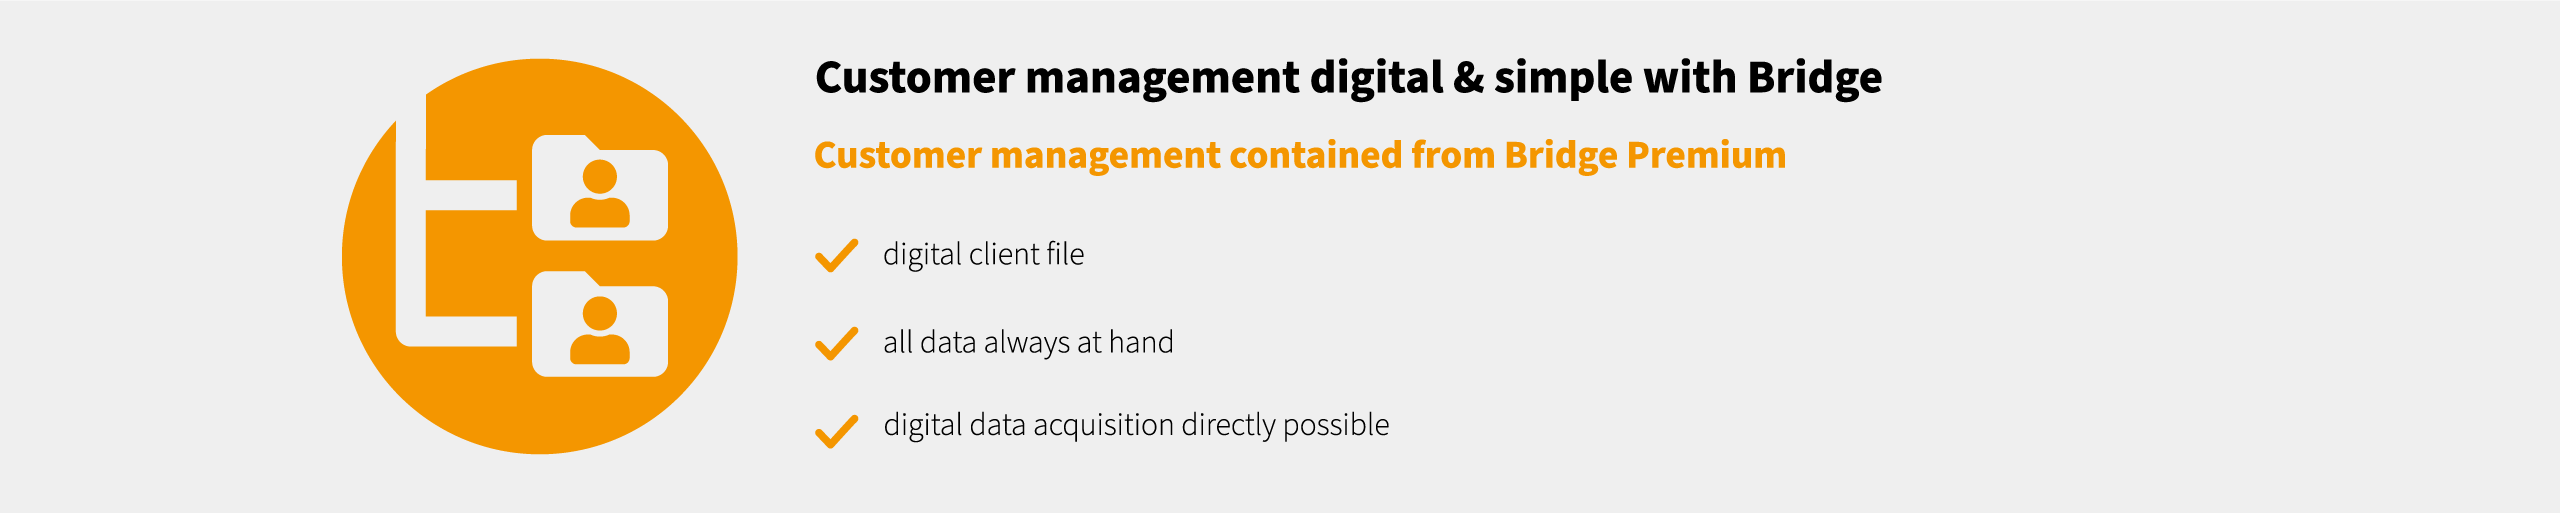 Your advantages for digital customer management with Bridge Premium